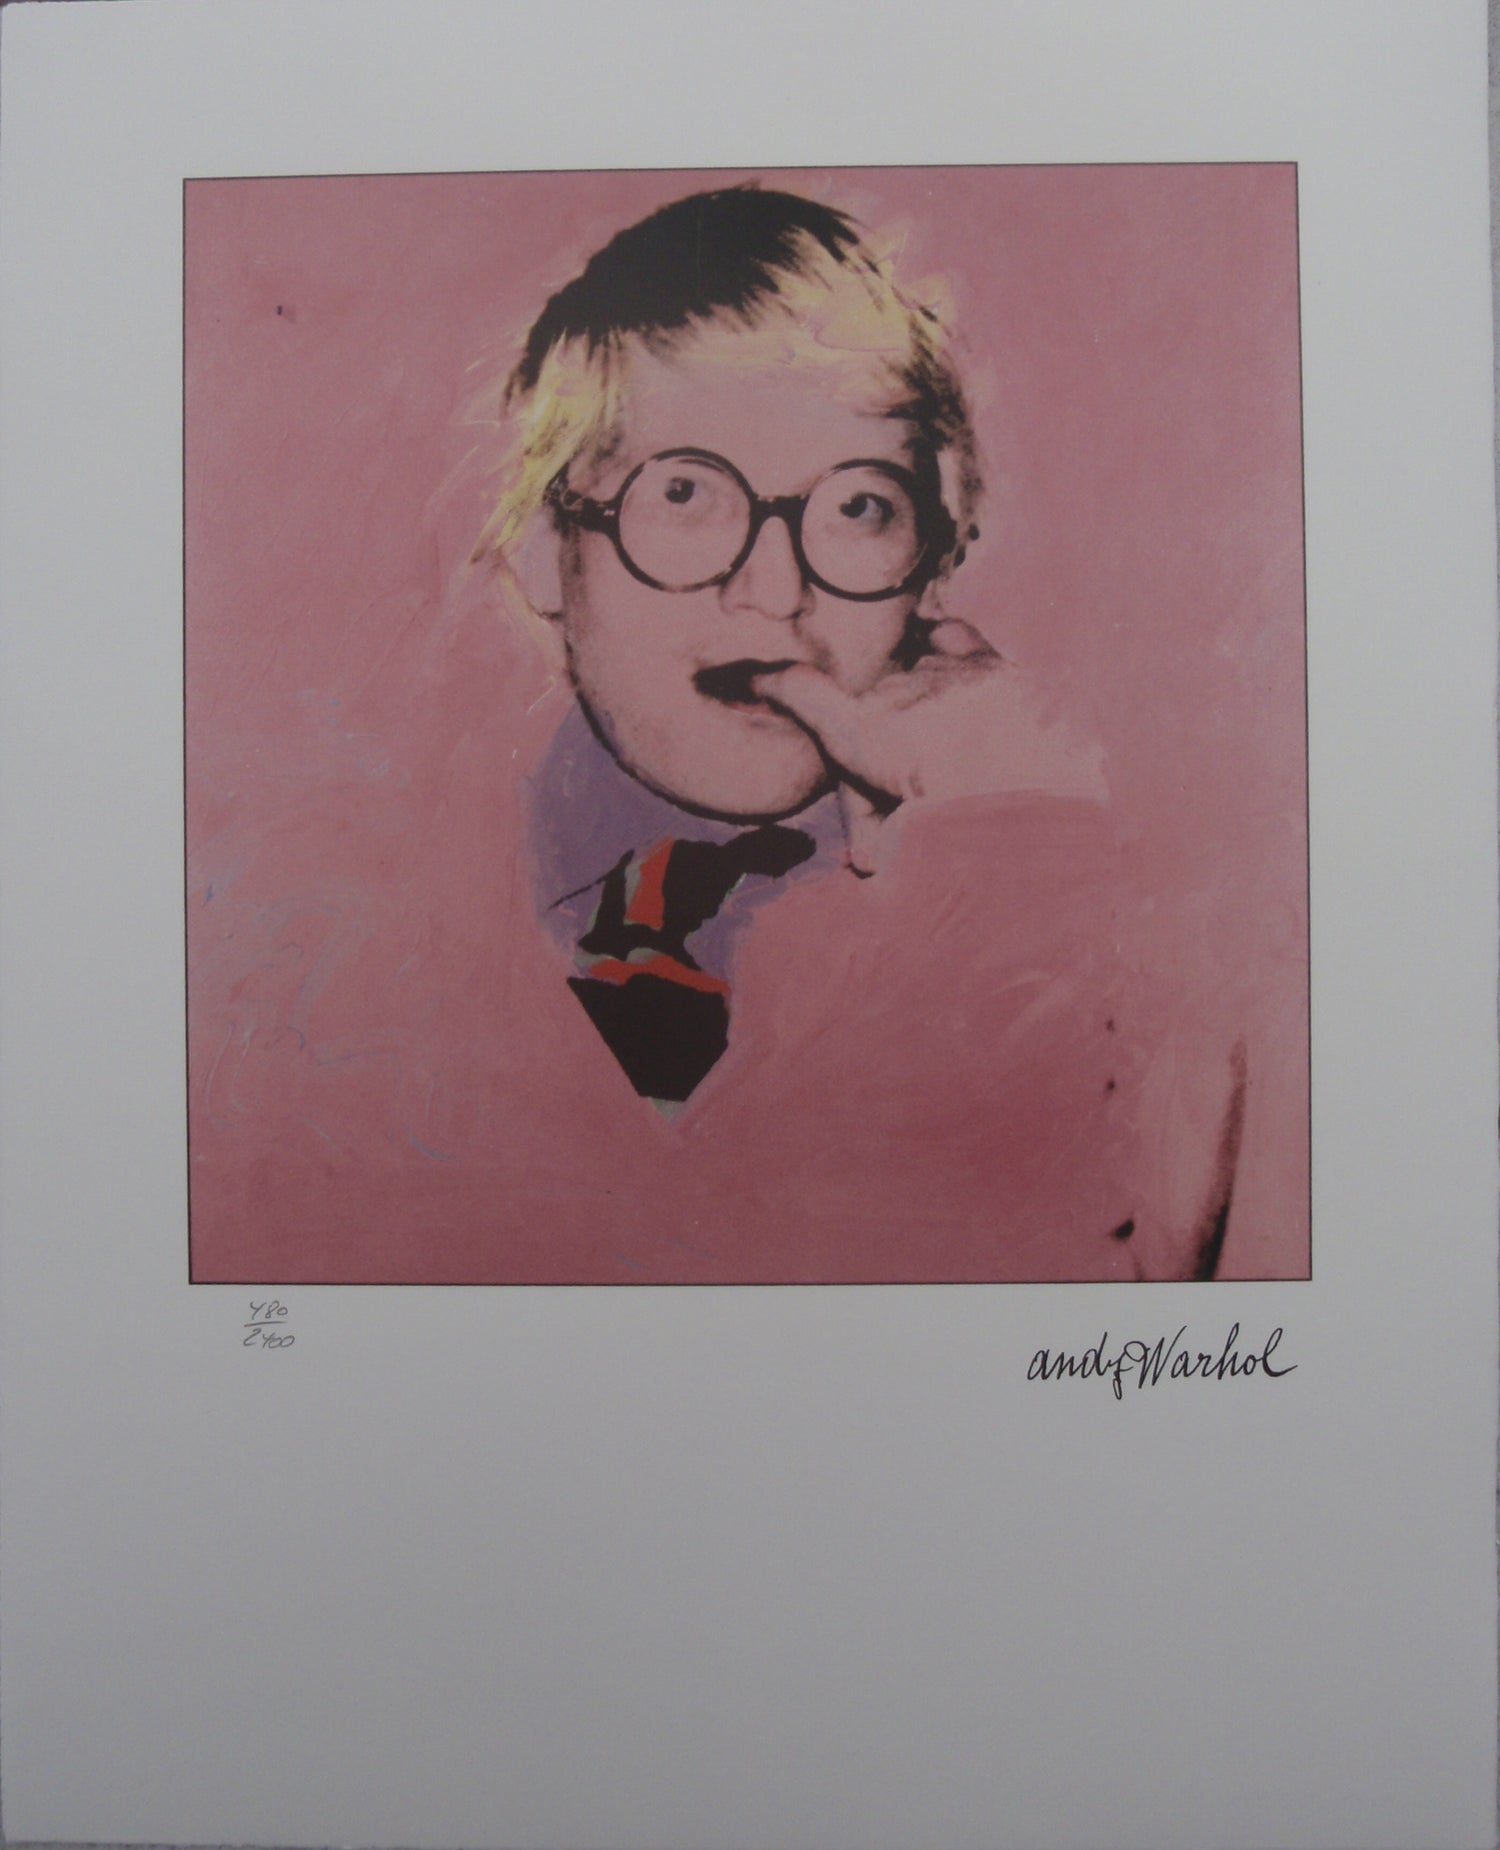 Andy Warhol Portraits David Hockney limited edition lithographs